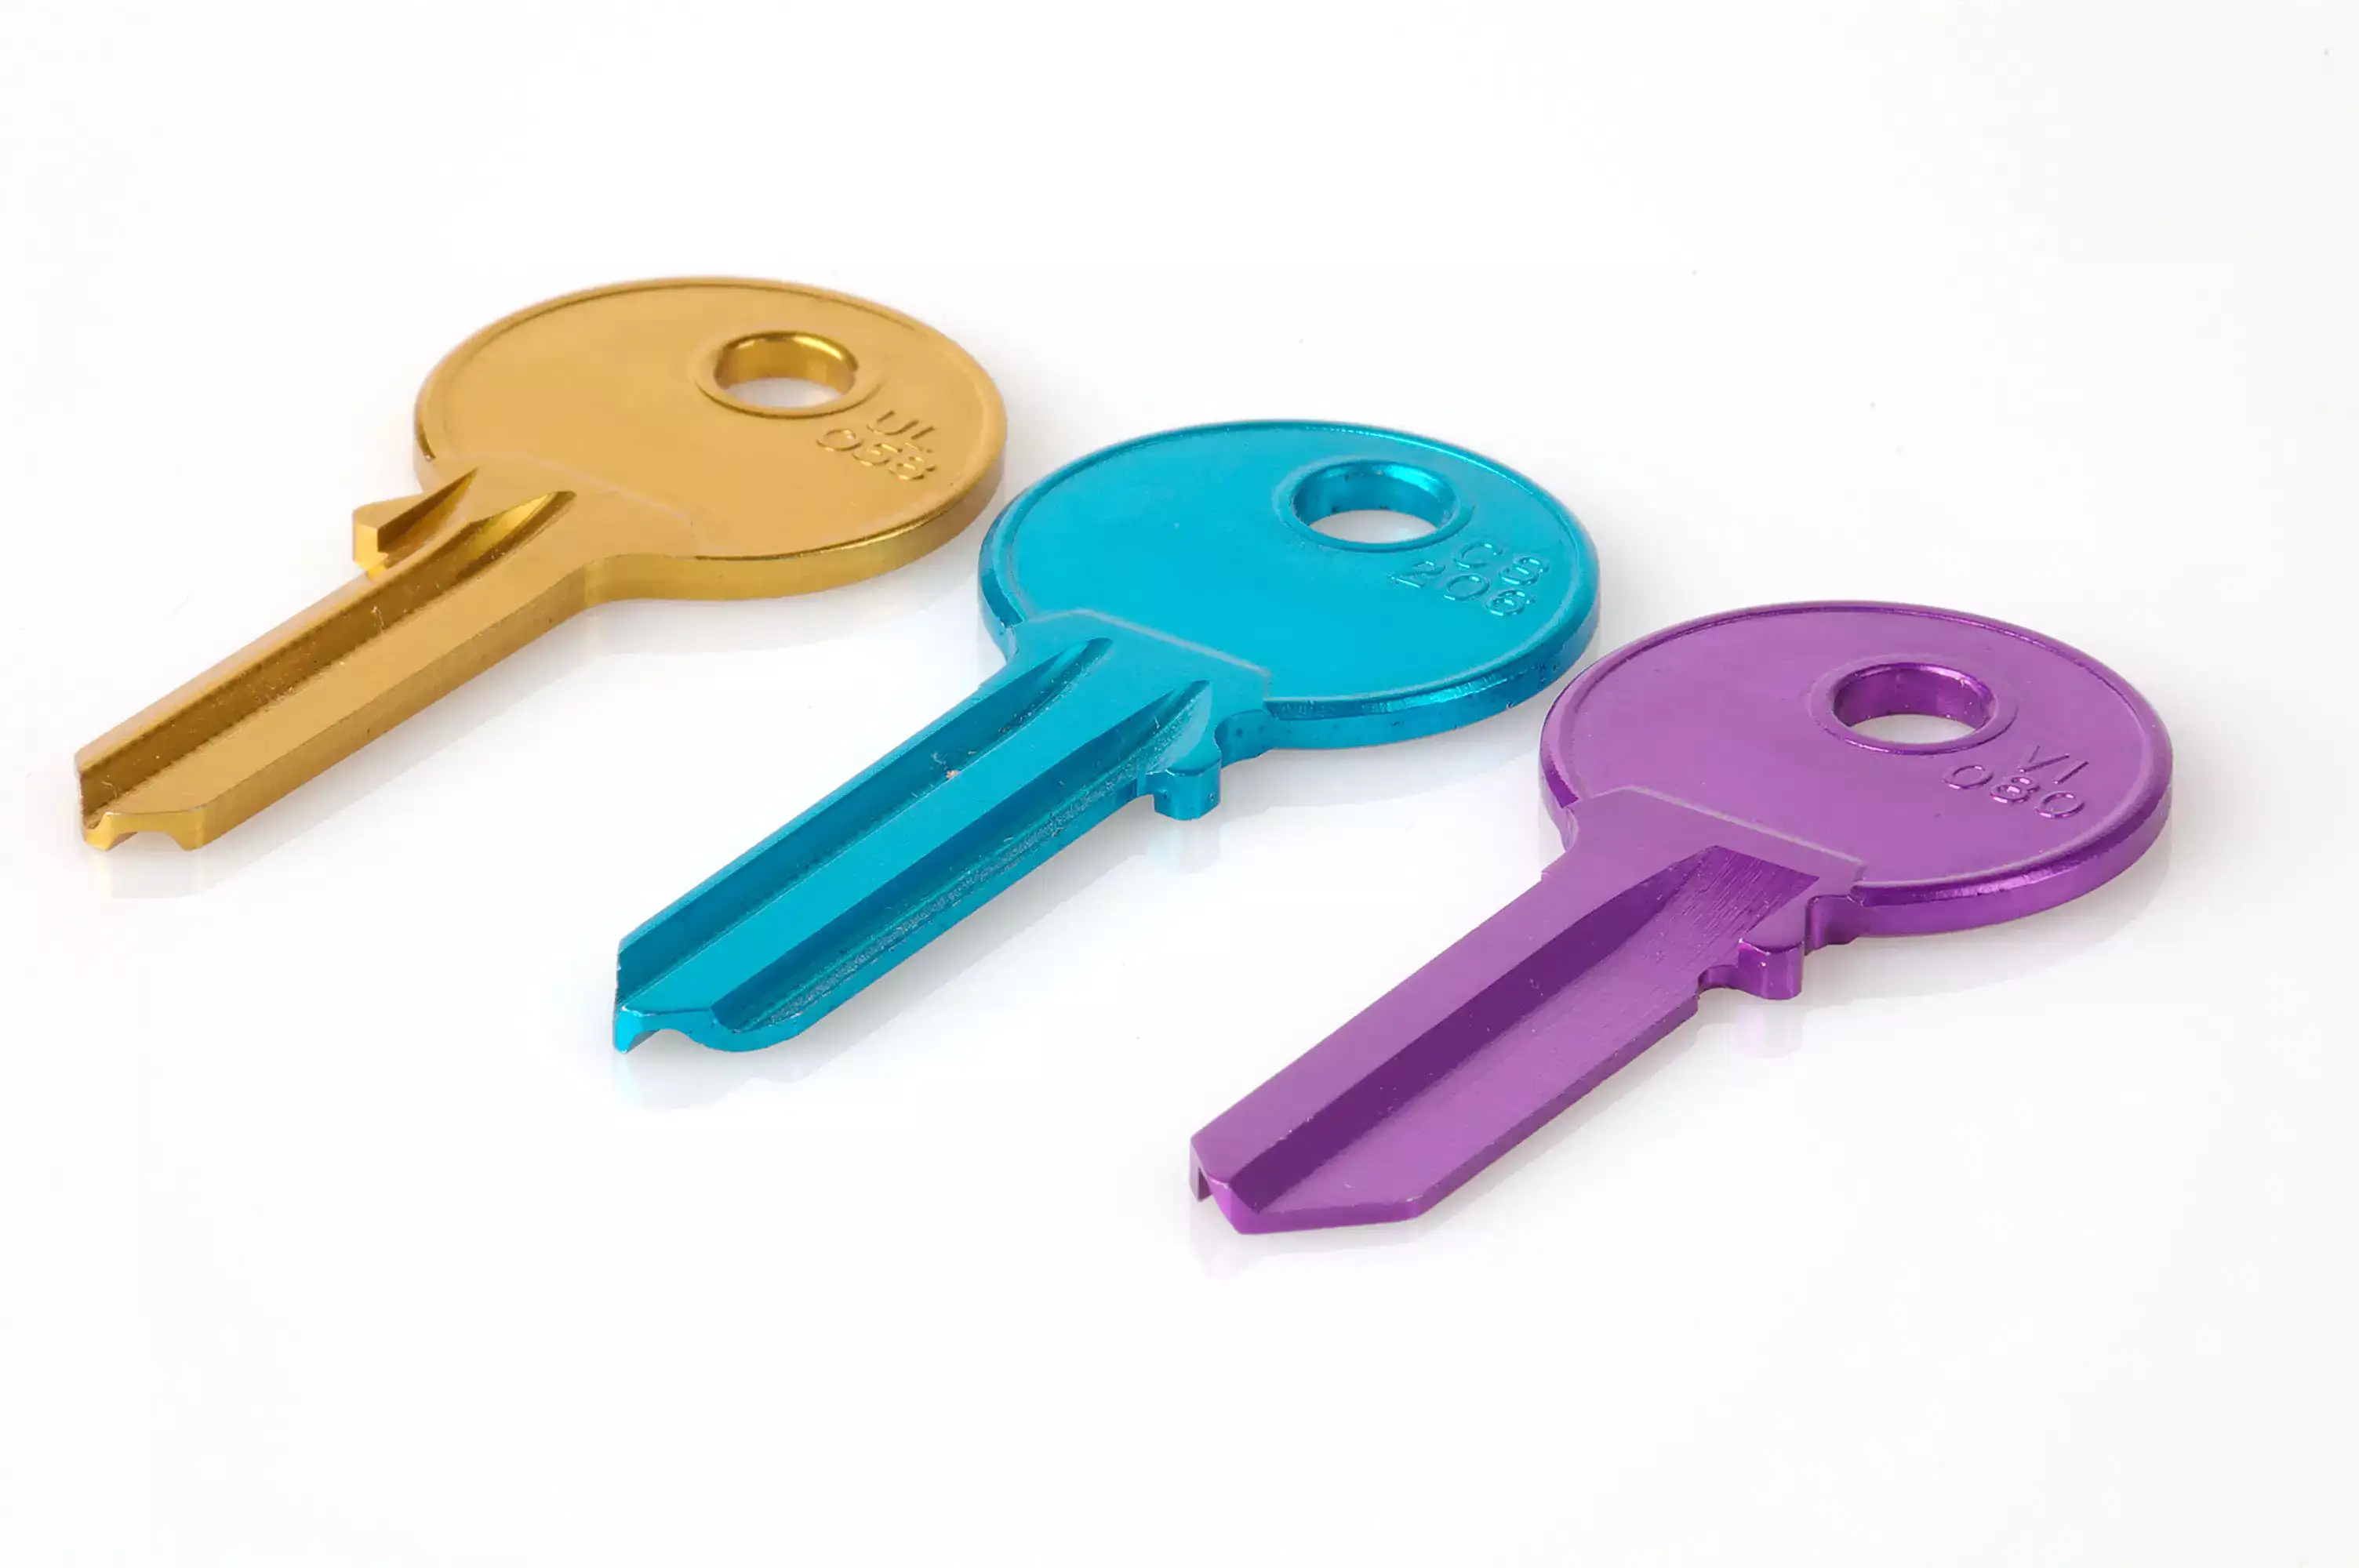 Three colorful keys (yellow, blue, and purple)